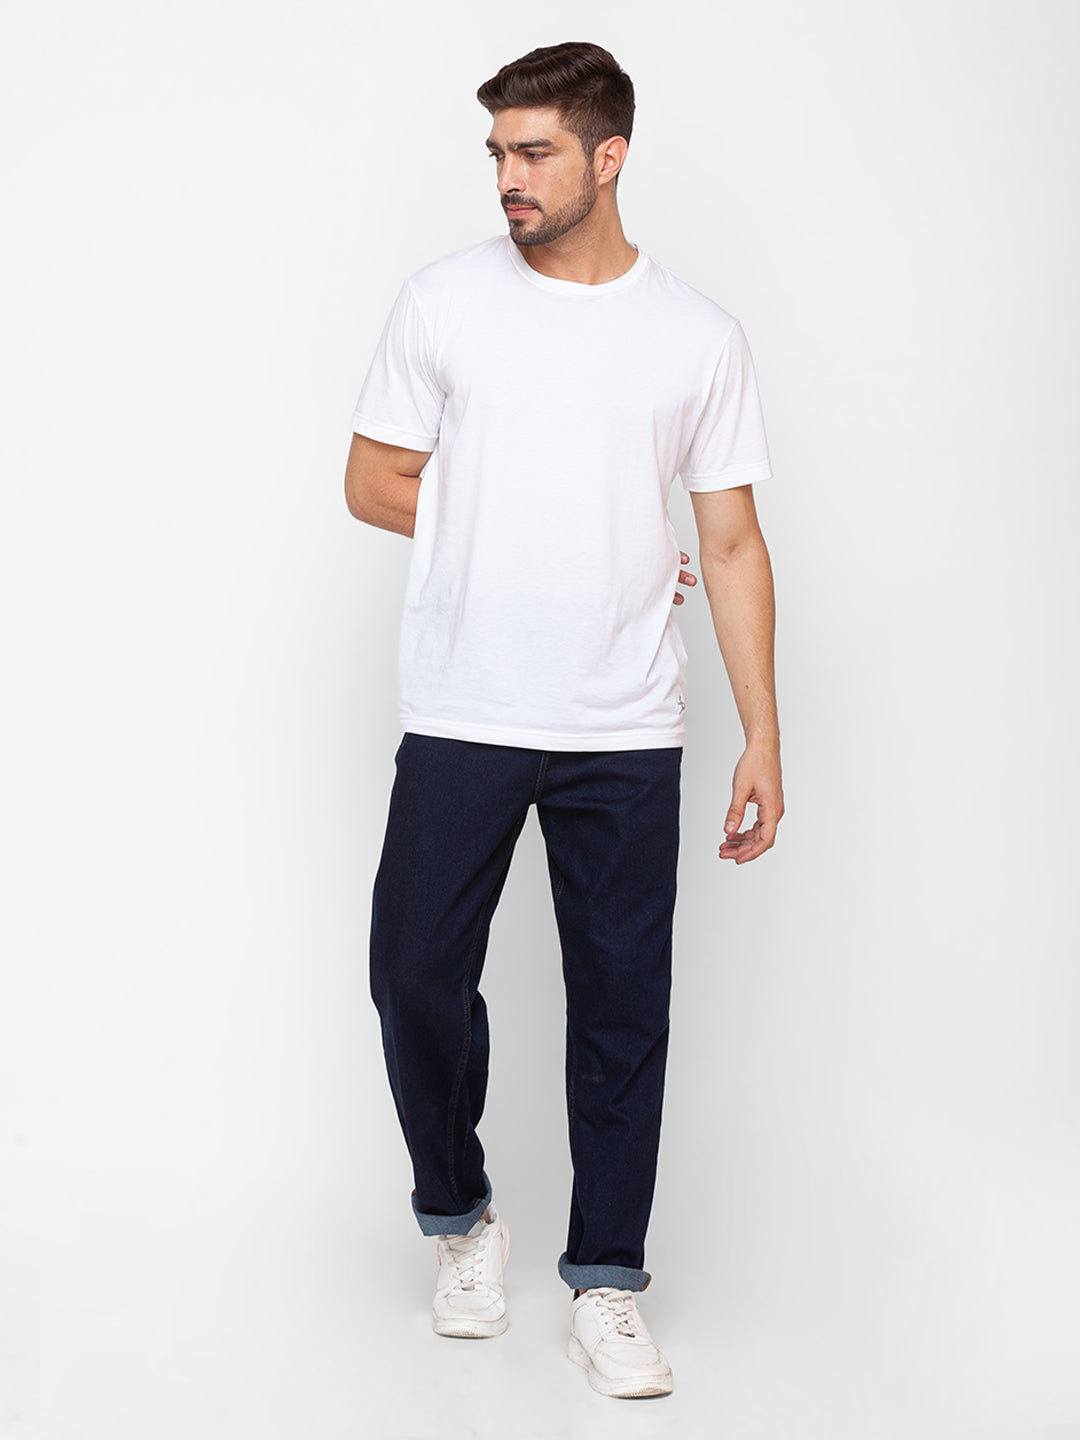 Spykar Raw Blue Cotton Loose Fit Regular Length Jeans For Men (Renato)